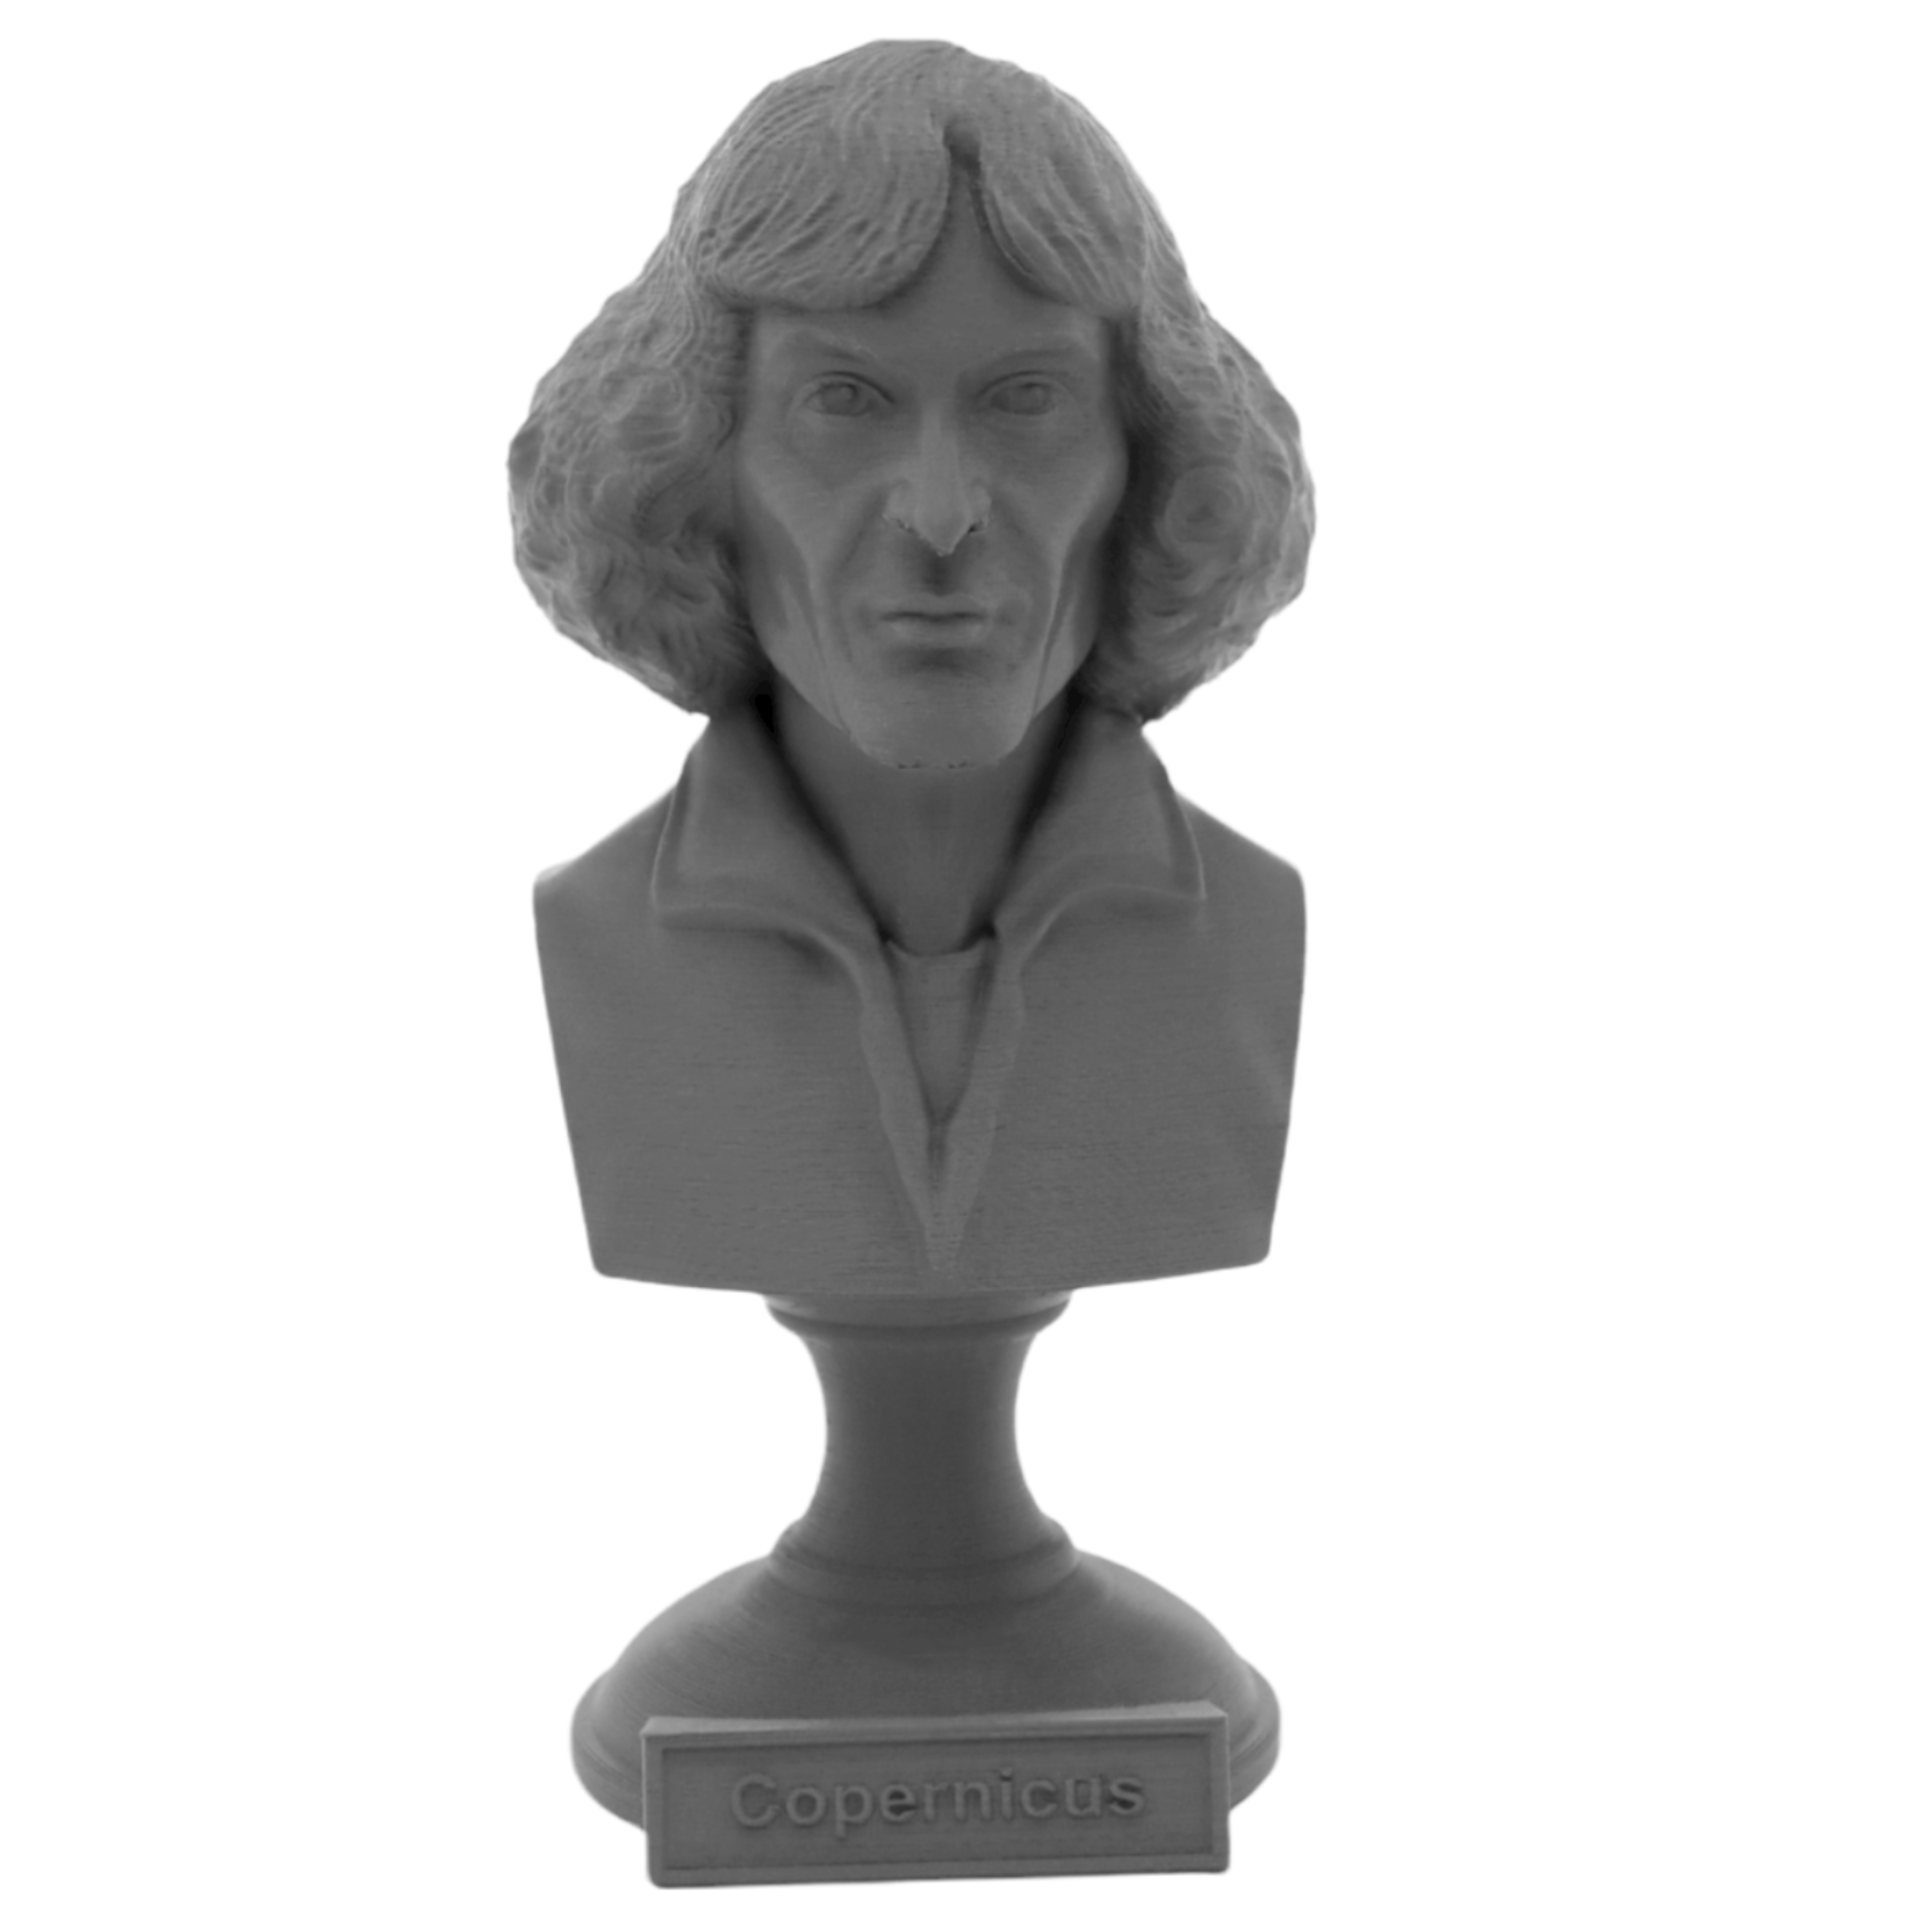 Nicolaus Copernicus Renaissance-era Polymath Sculpture Bust on Pedestal